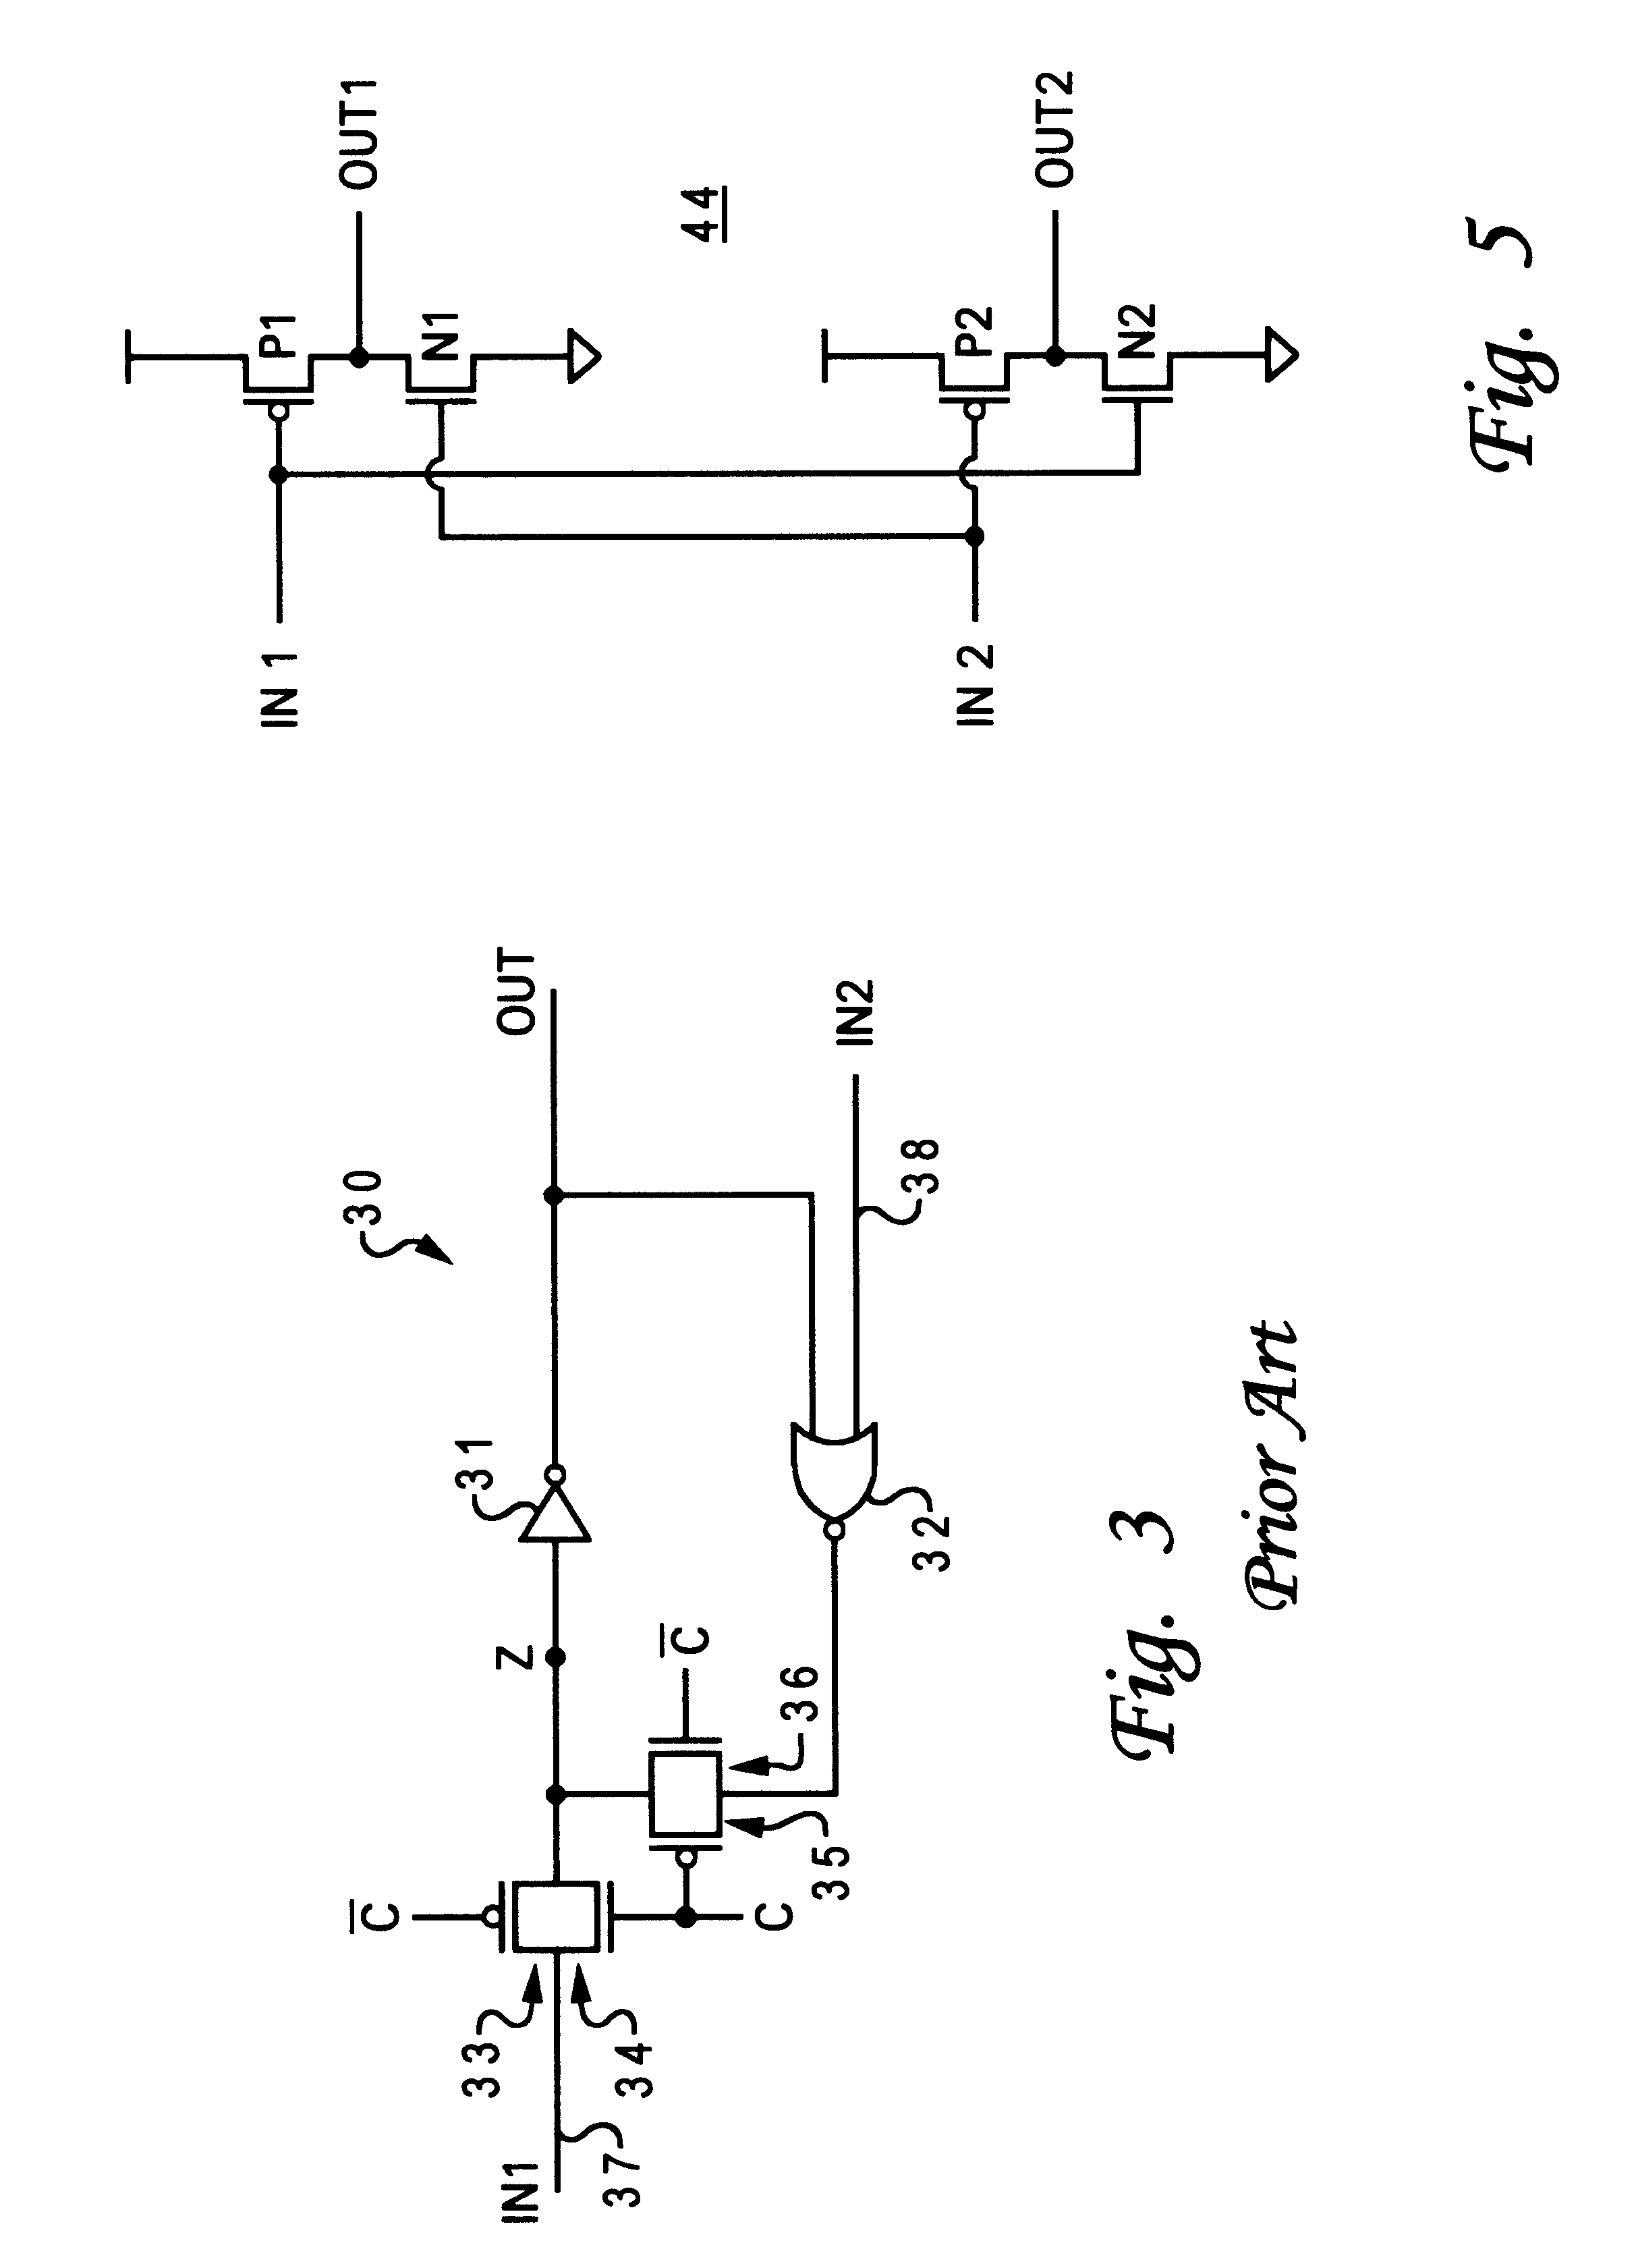 Single event upset (SEU) hardened latch circuit